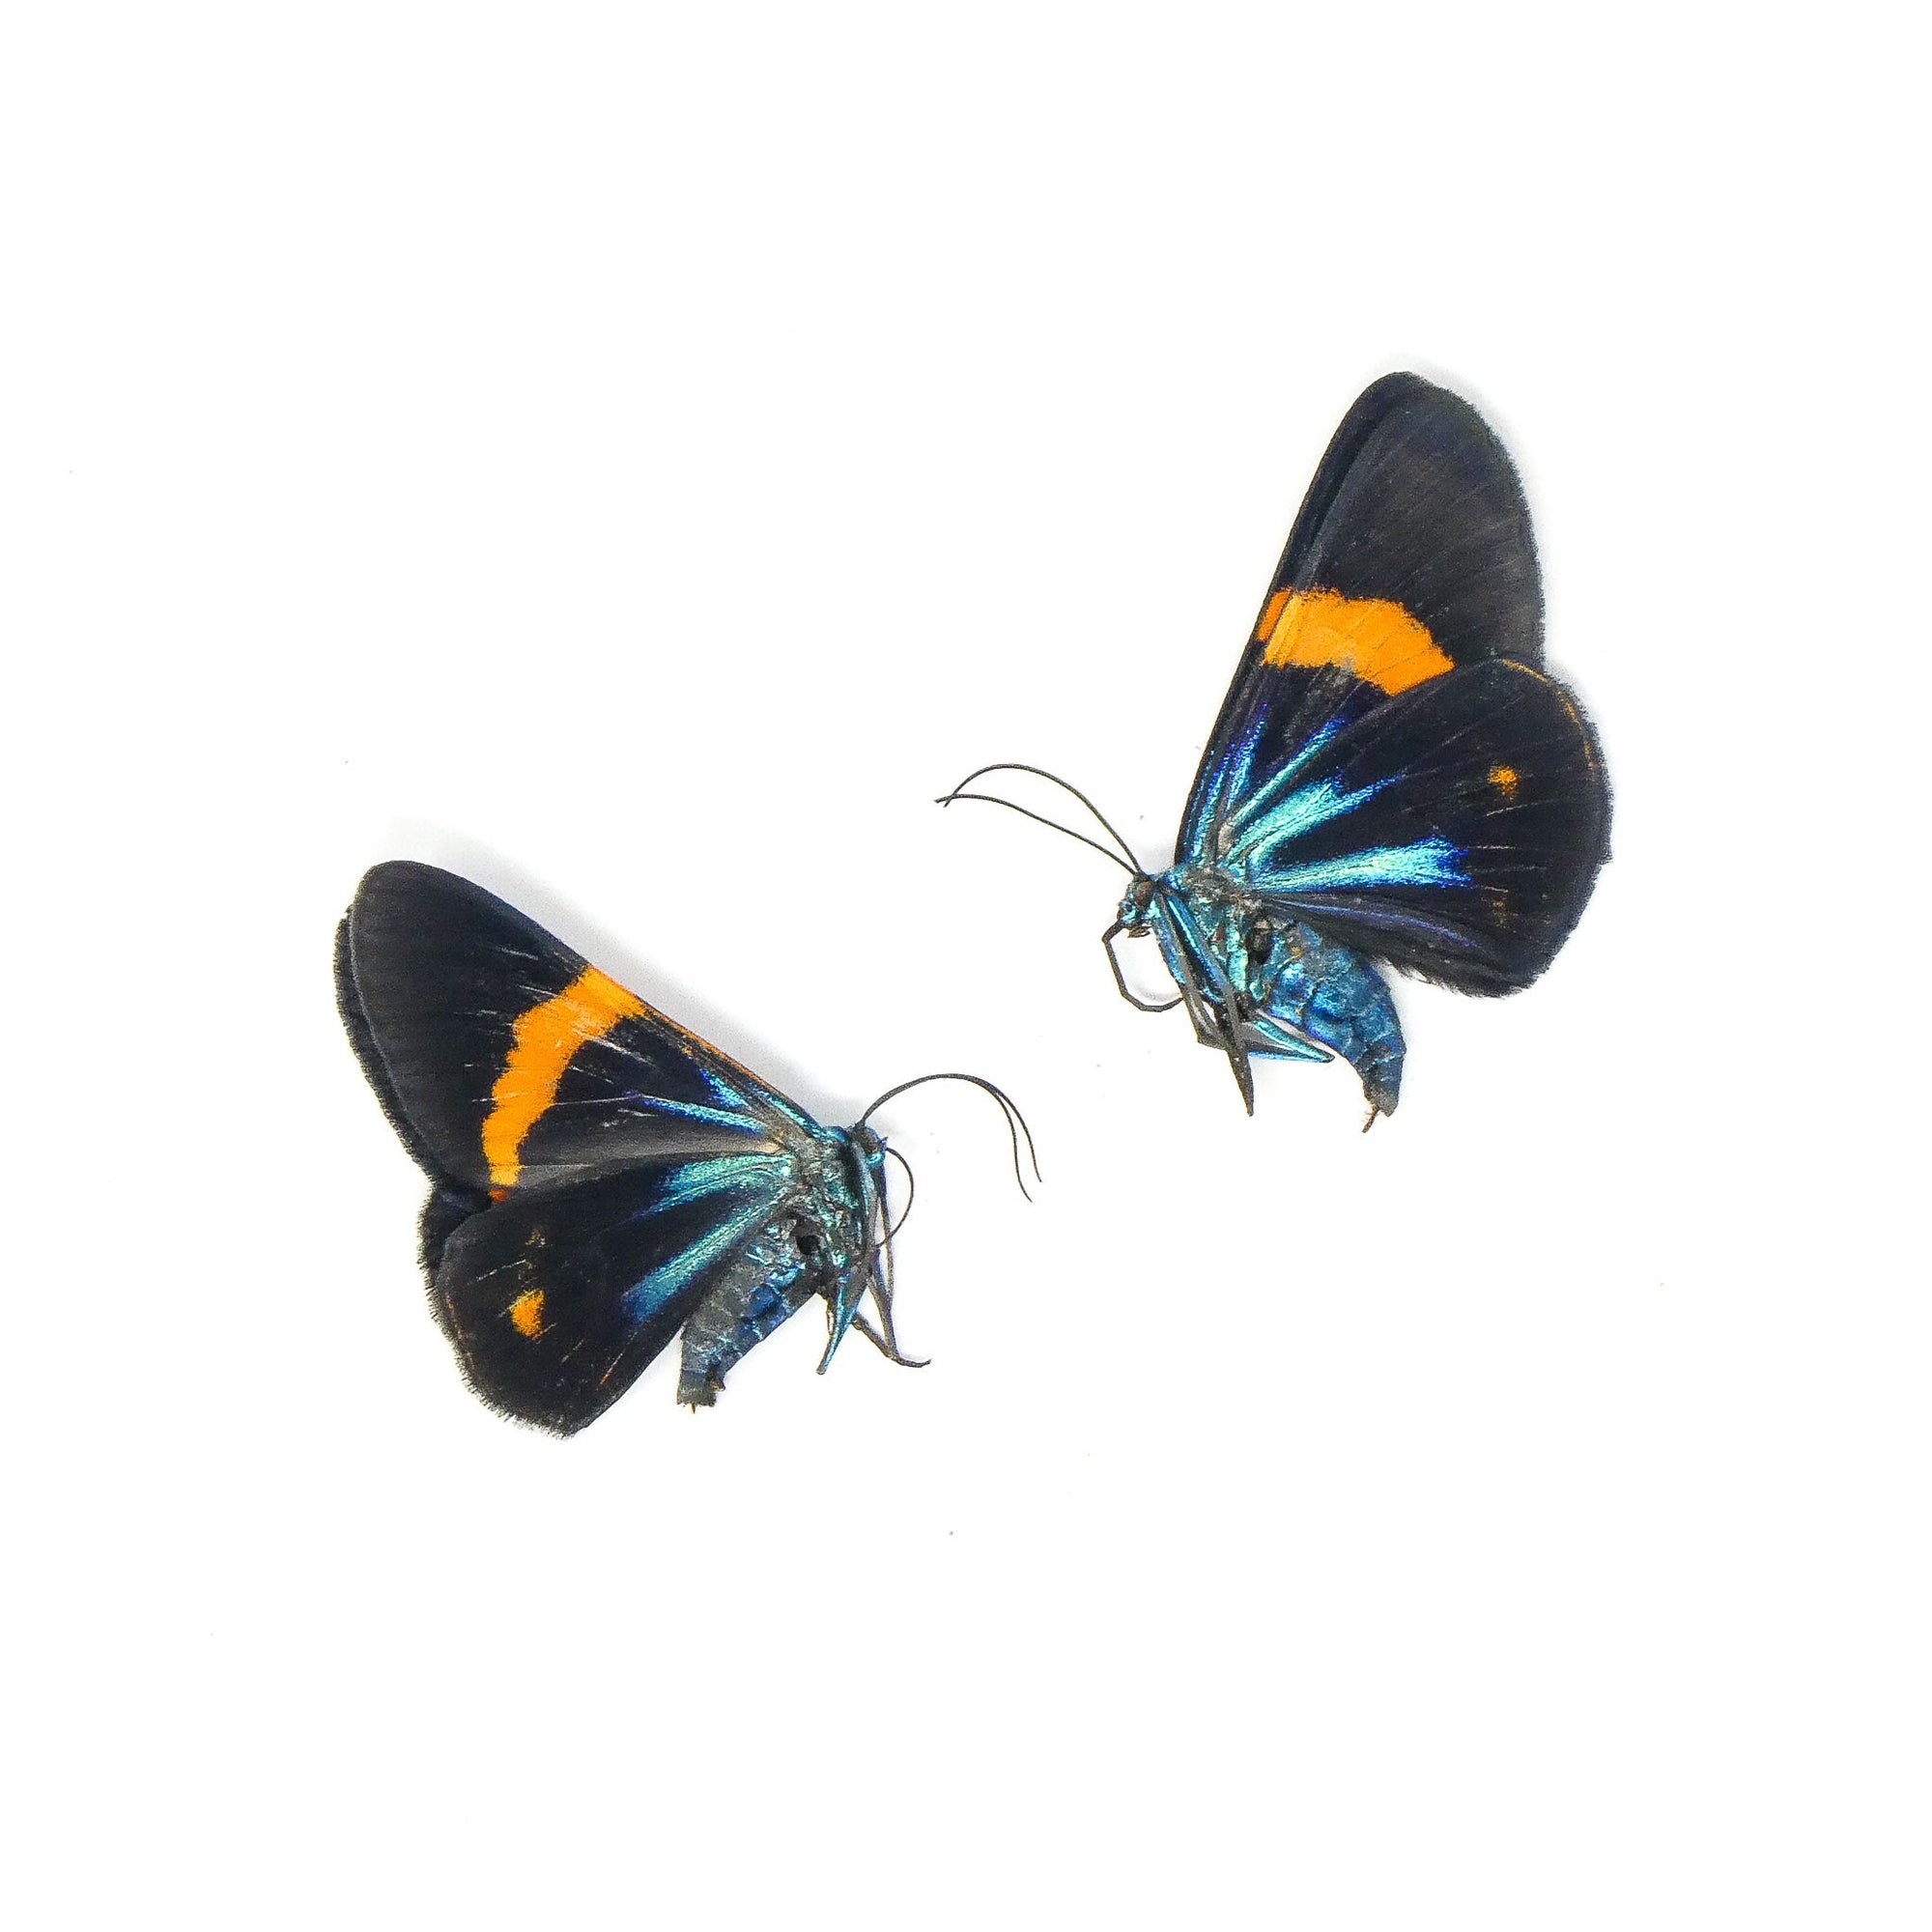 Two (2) Milionia stueningi - Sexed Pair of Vibrant Day Moths - A1 Ethically Sourced Entomology Specimens